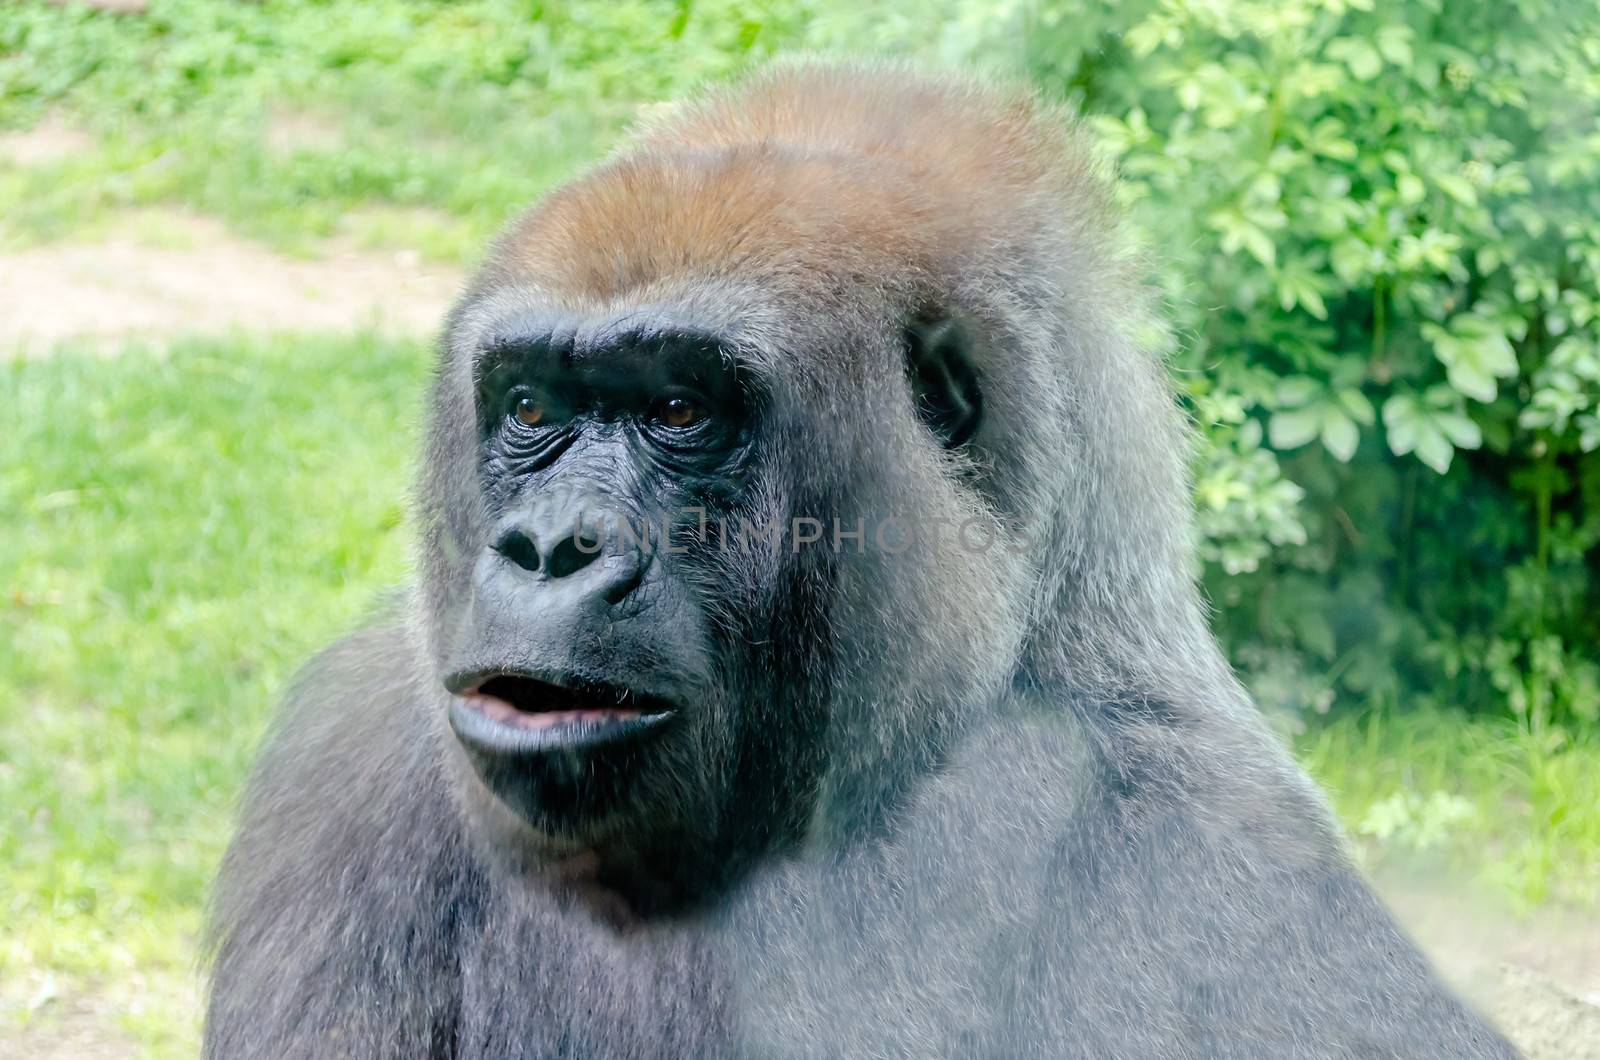 Peaceful Gorilla Close-Up